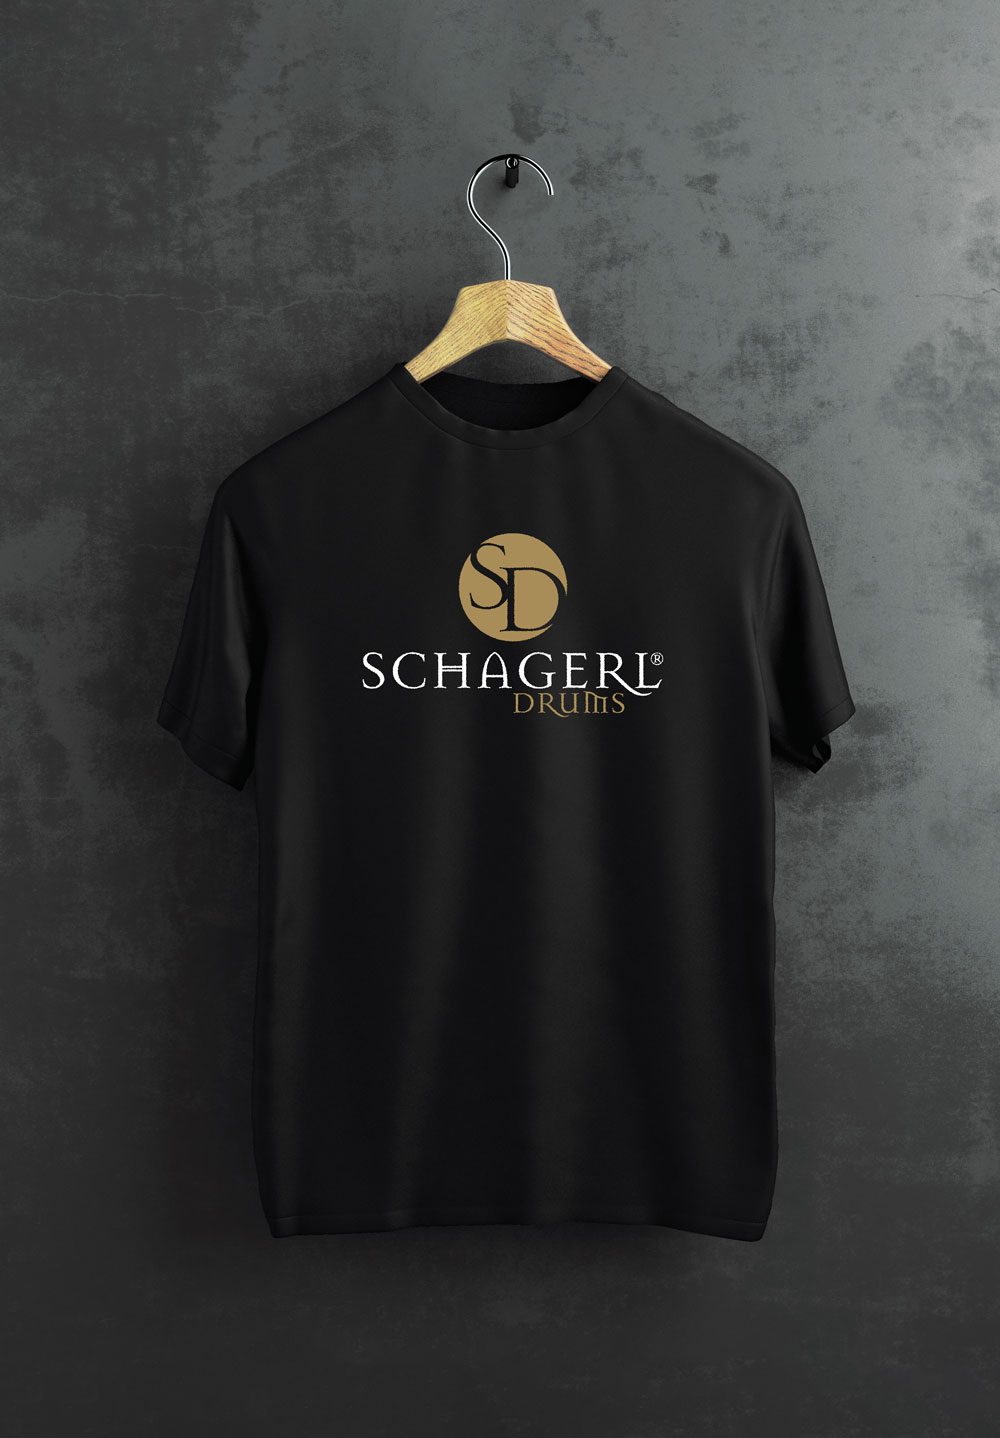 Schagerl Drums T-Shirt black SD - XLARGE